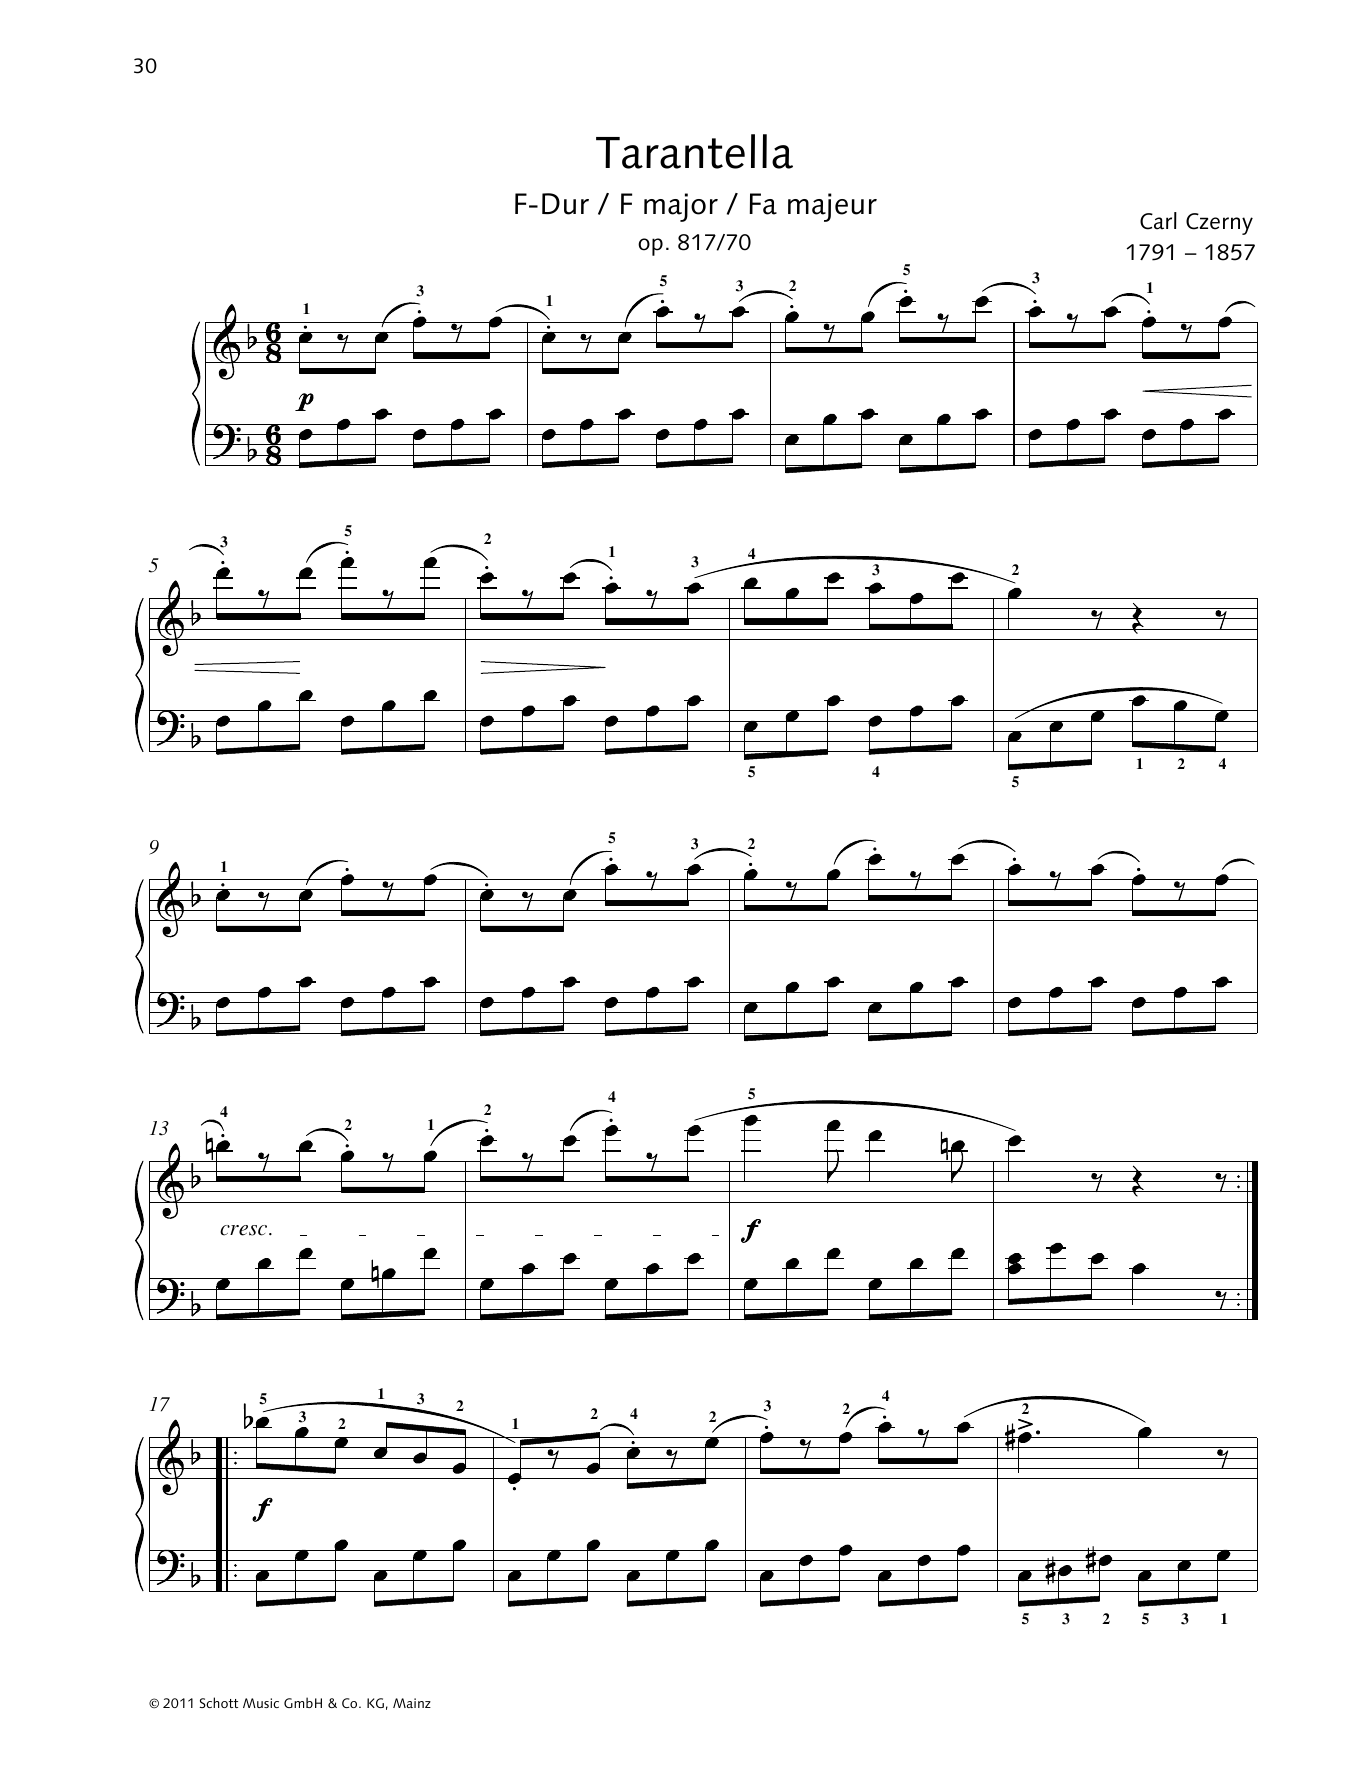 Carl Czerny Tarantella F major Sheet Music Notes & Chords for Piano Solo - Download or Print PDF